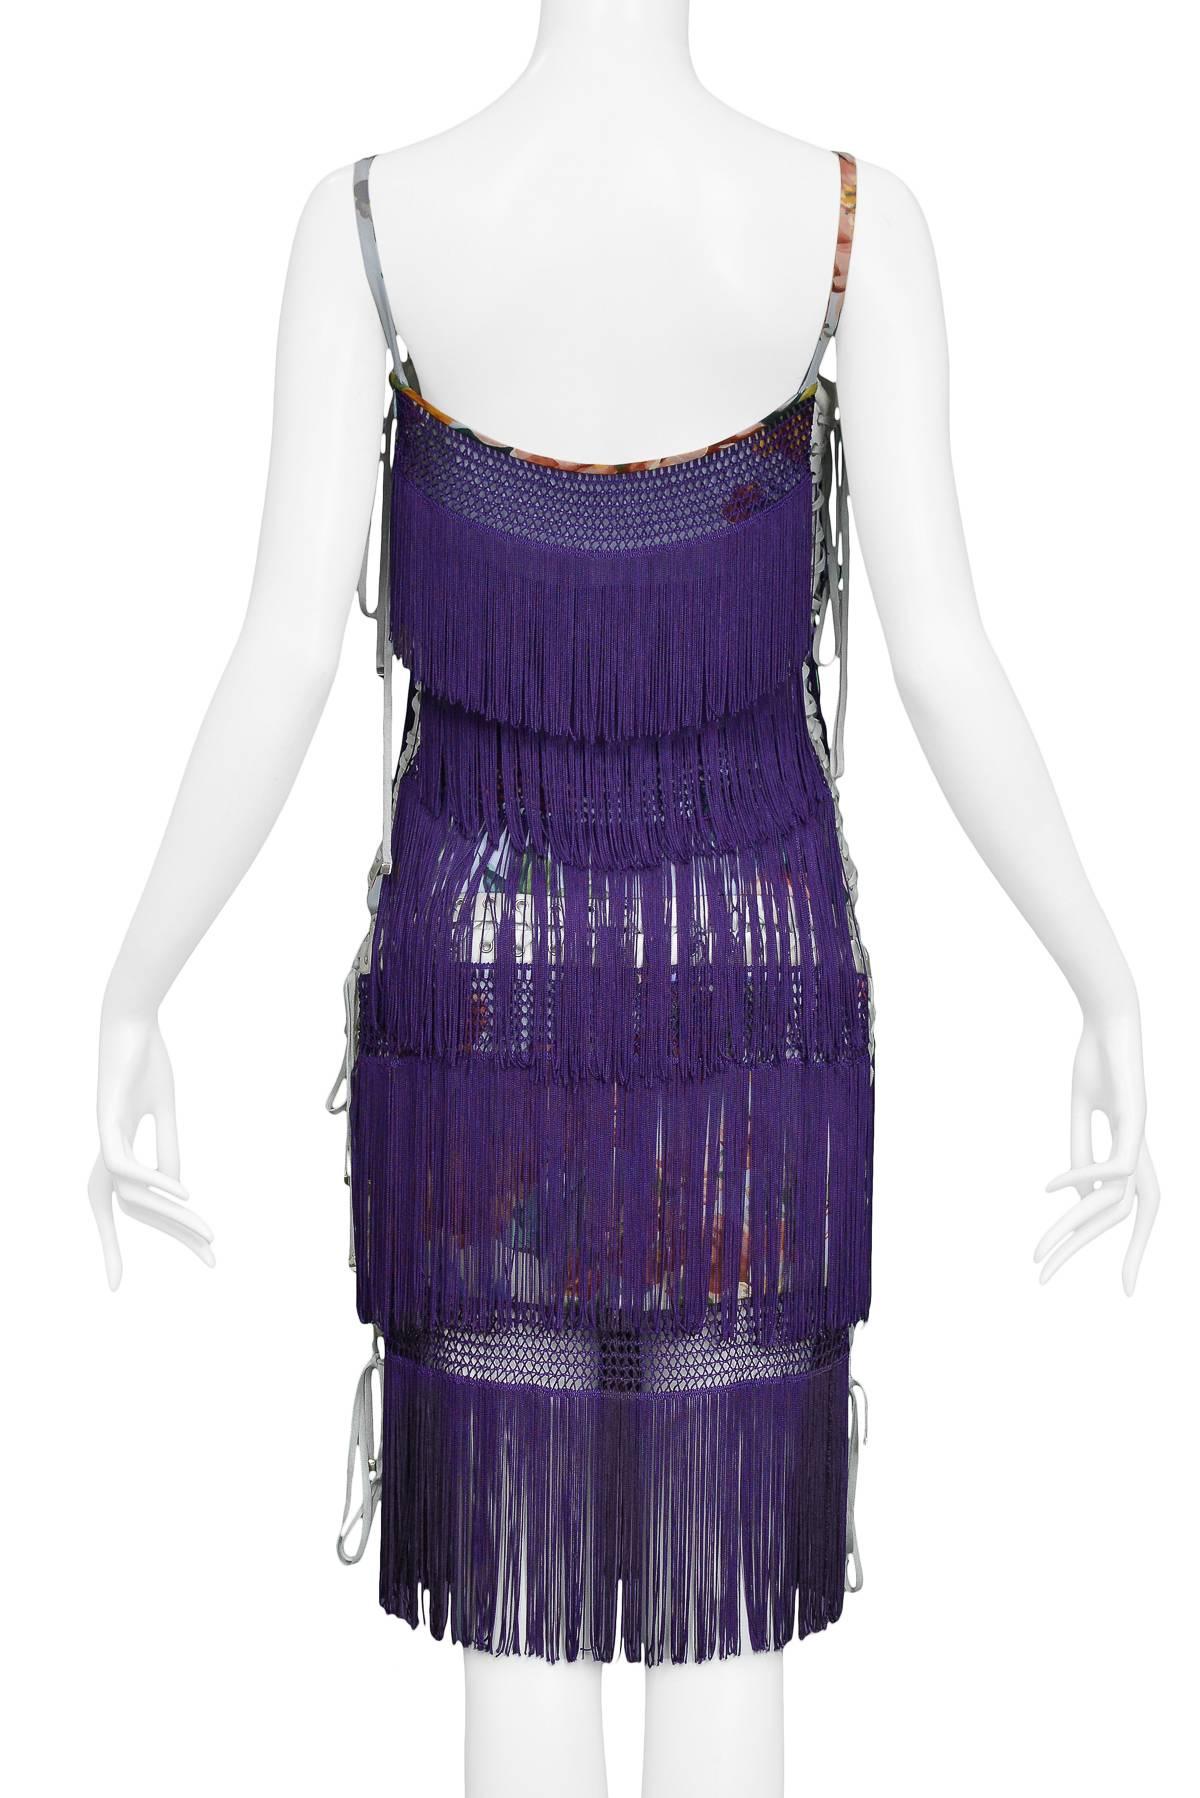 Dolce & Gabbana Purple Fringe and Floral Corset Runway Dress 2003  1